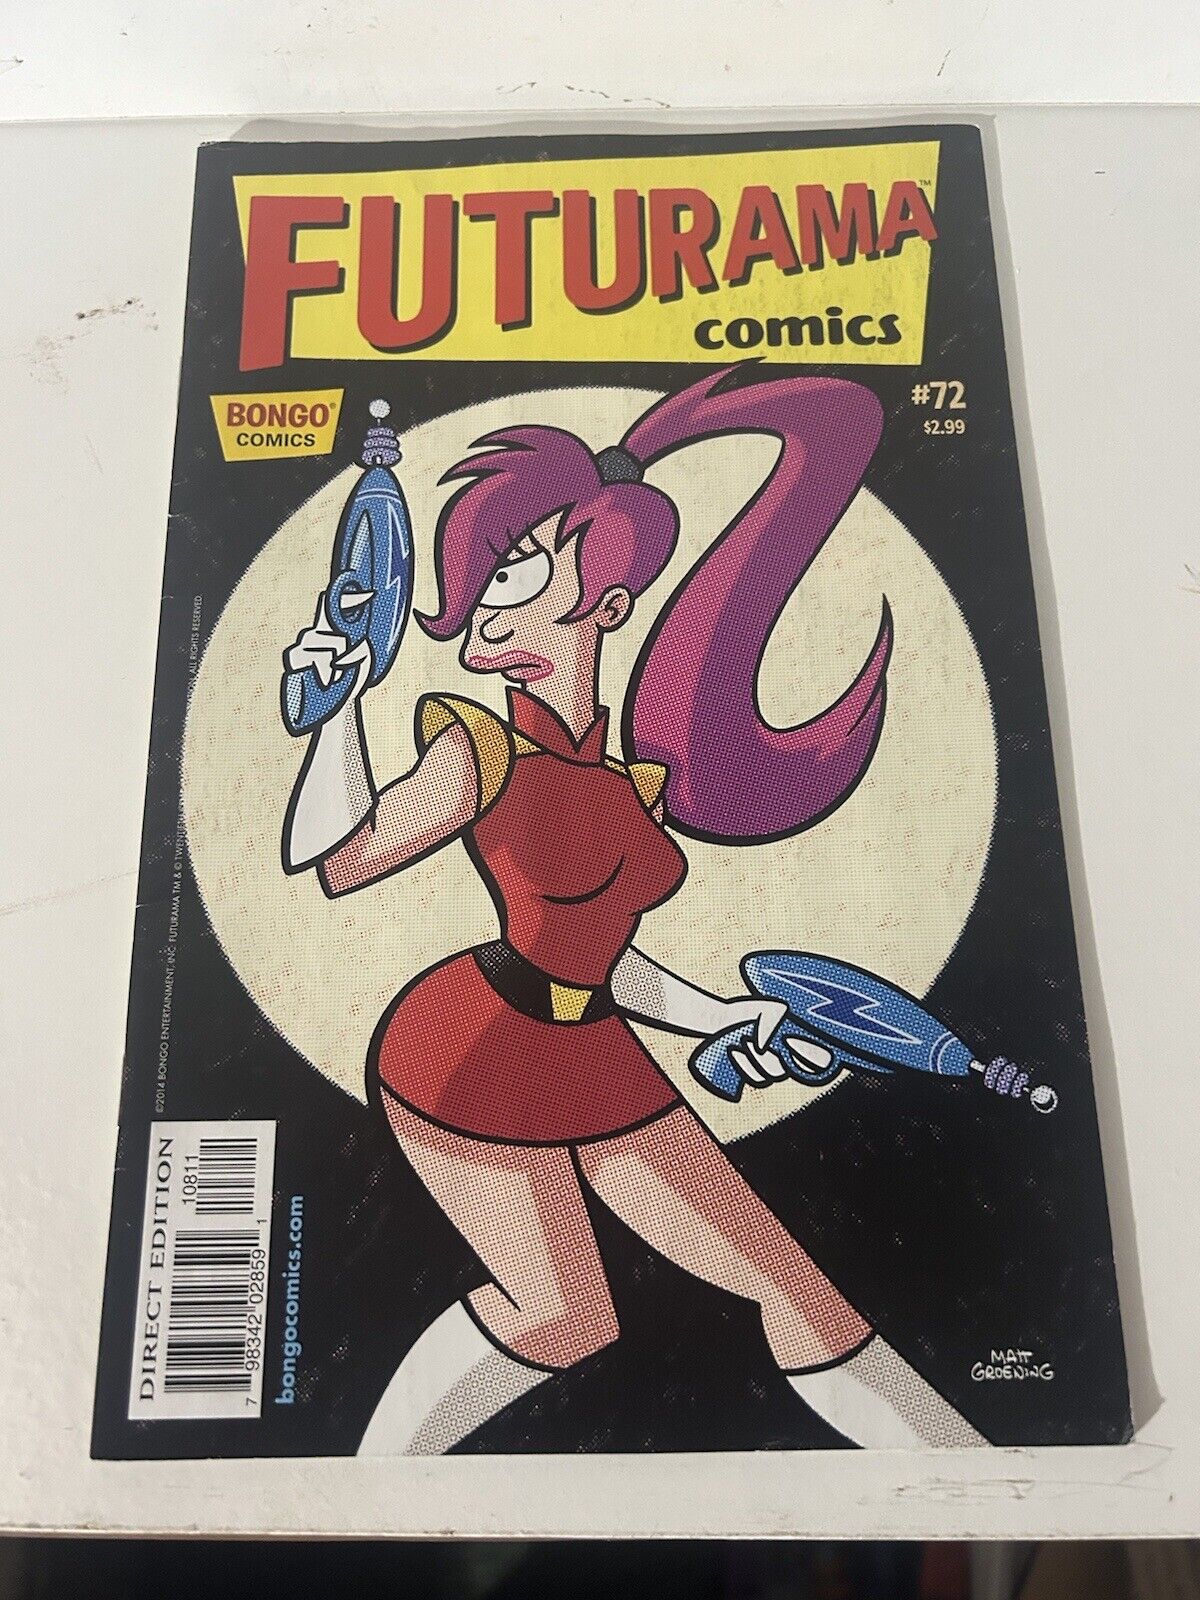 Bongo Comics Presents Futurama Comics #72 (Bongo, September 2014)